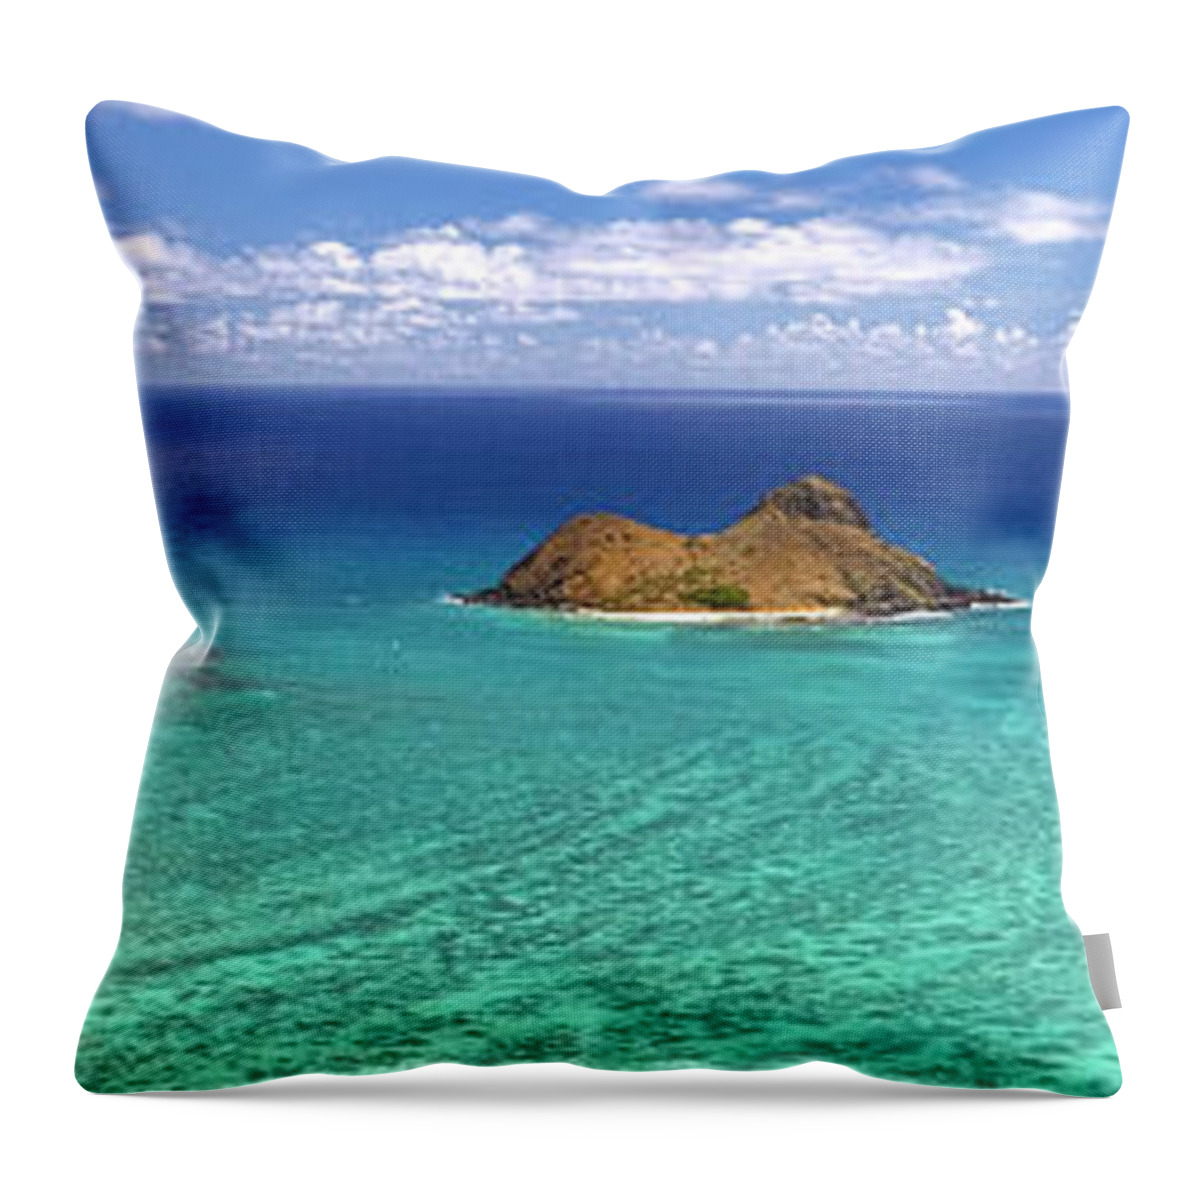 Lanikai Beach Throw Pillow featuring the photograph Lanikai Beach From Above Panorama by Aloha Art